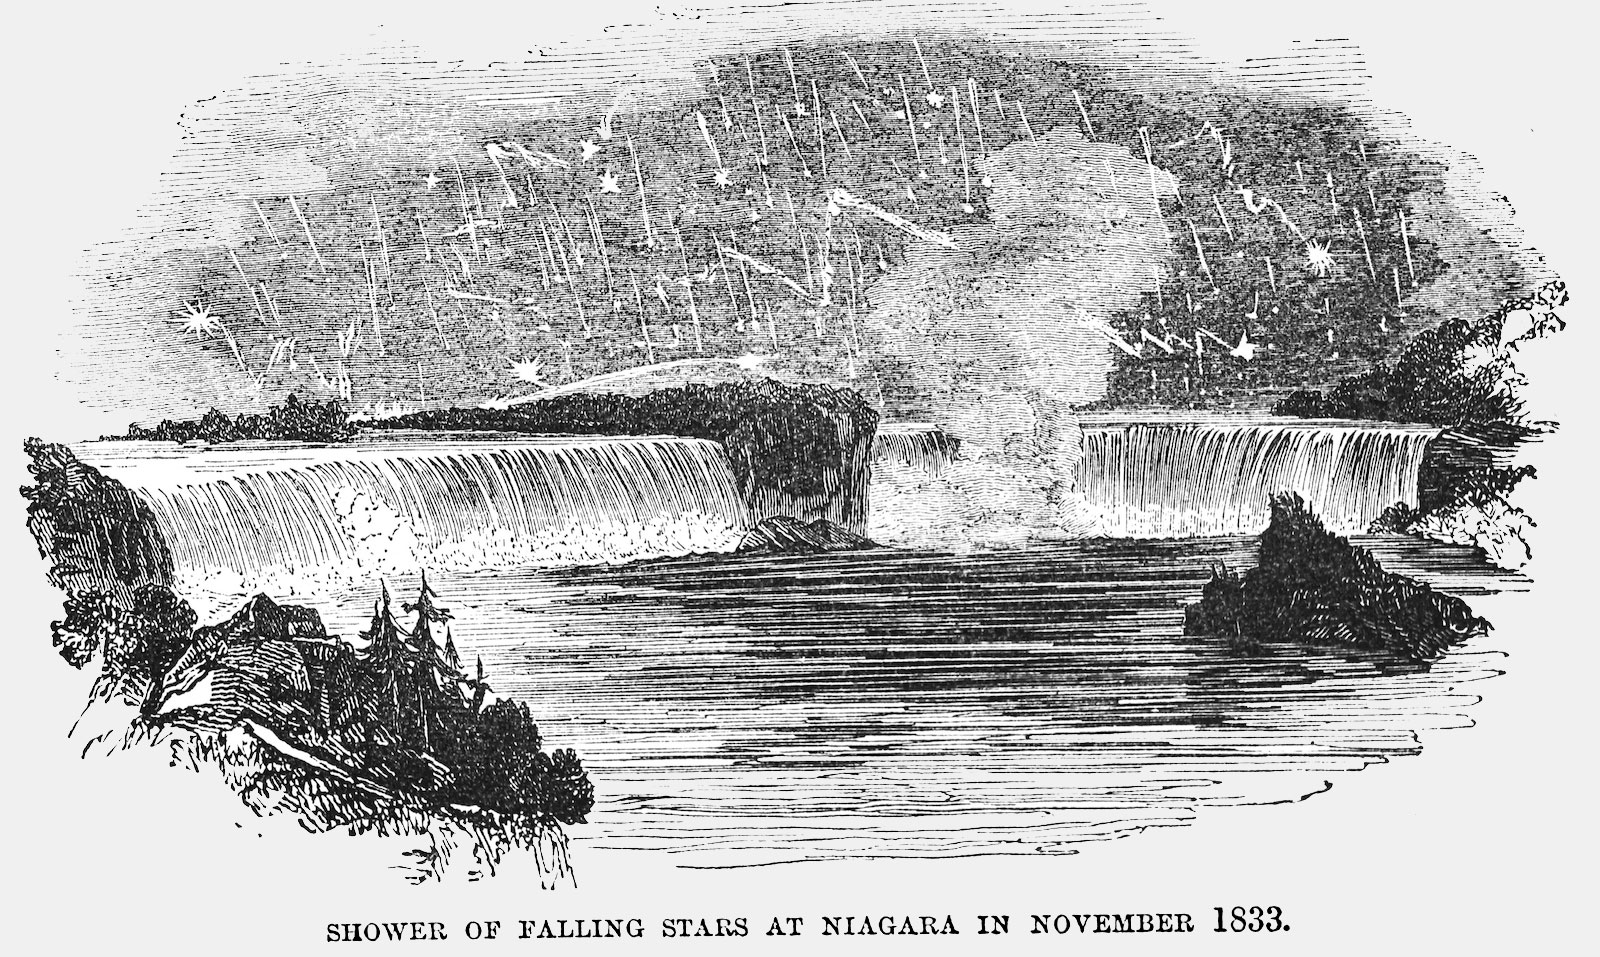 an engraving of stars falling near a waterfall